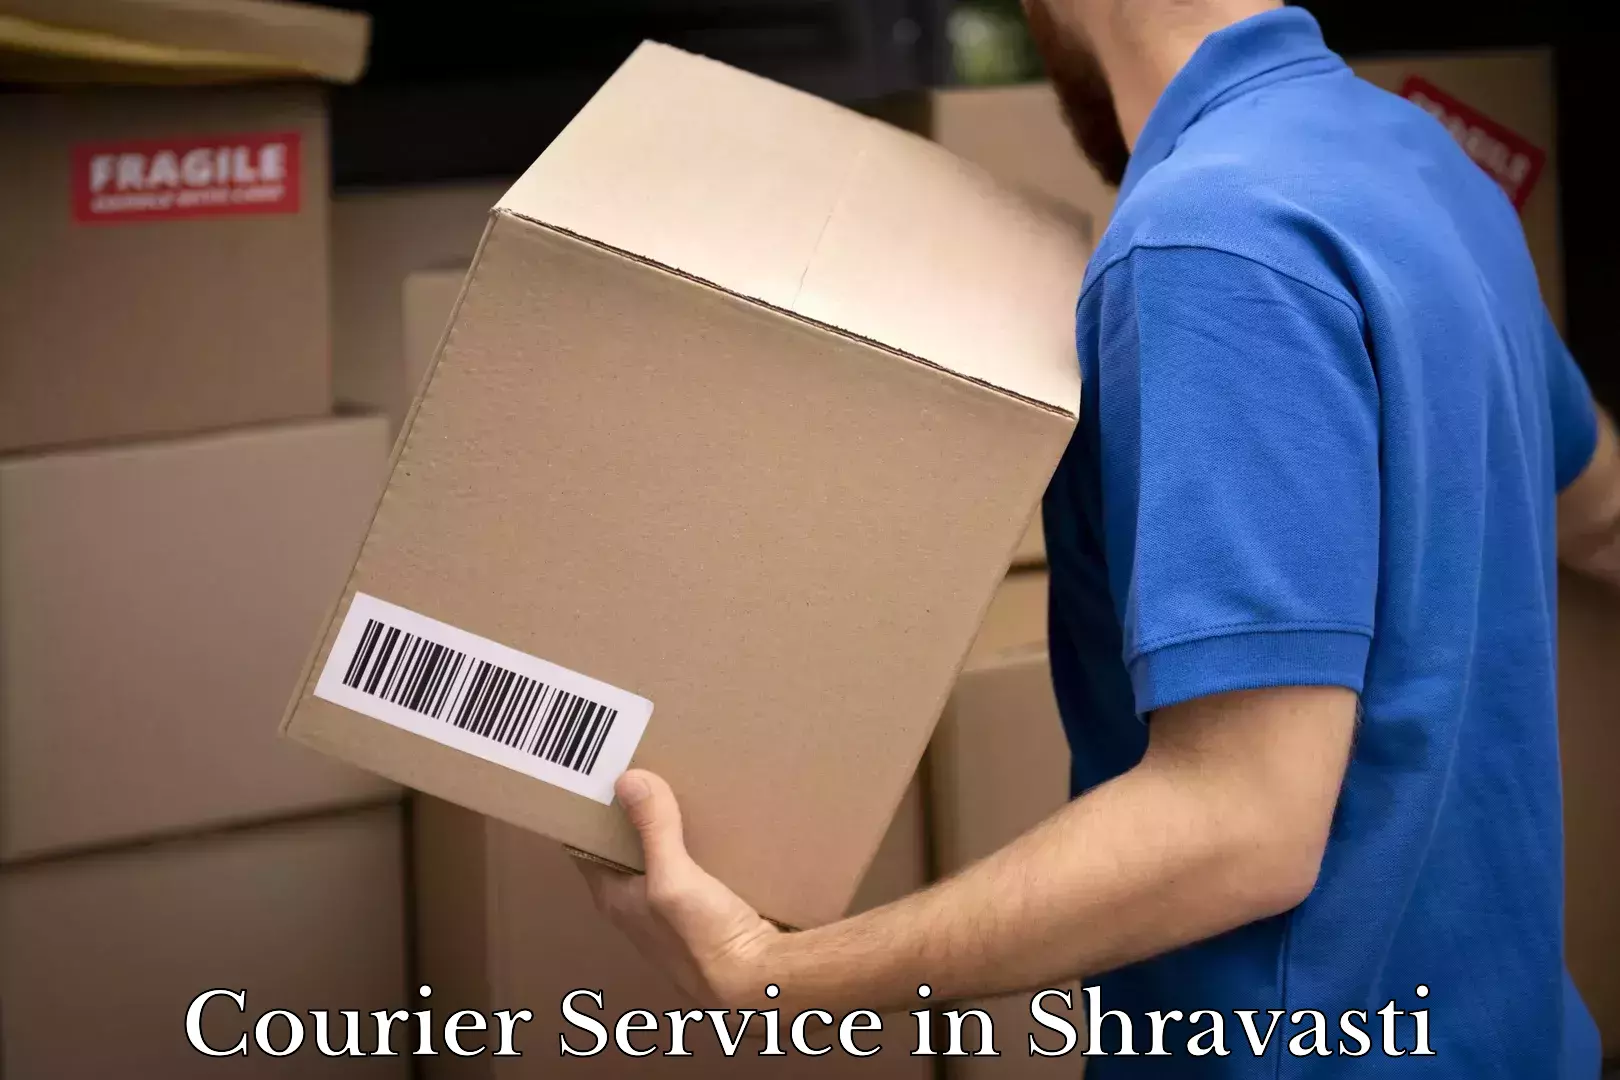 Innovative logistics solutions in Shravasti